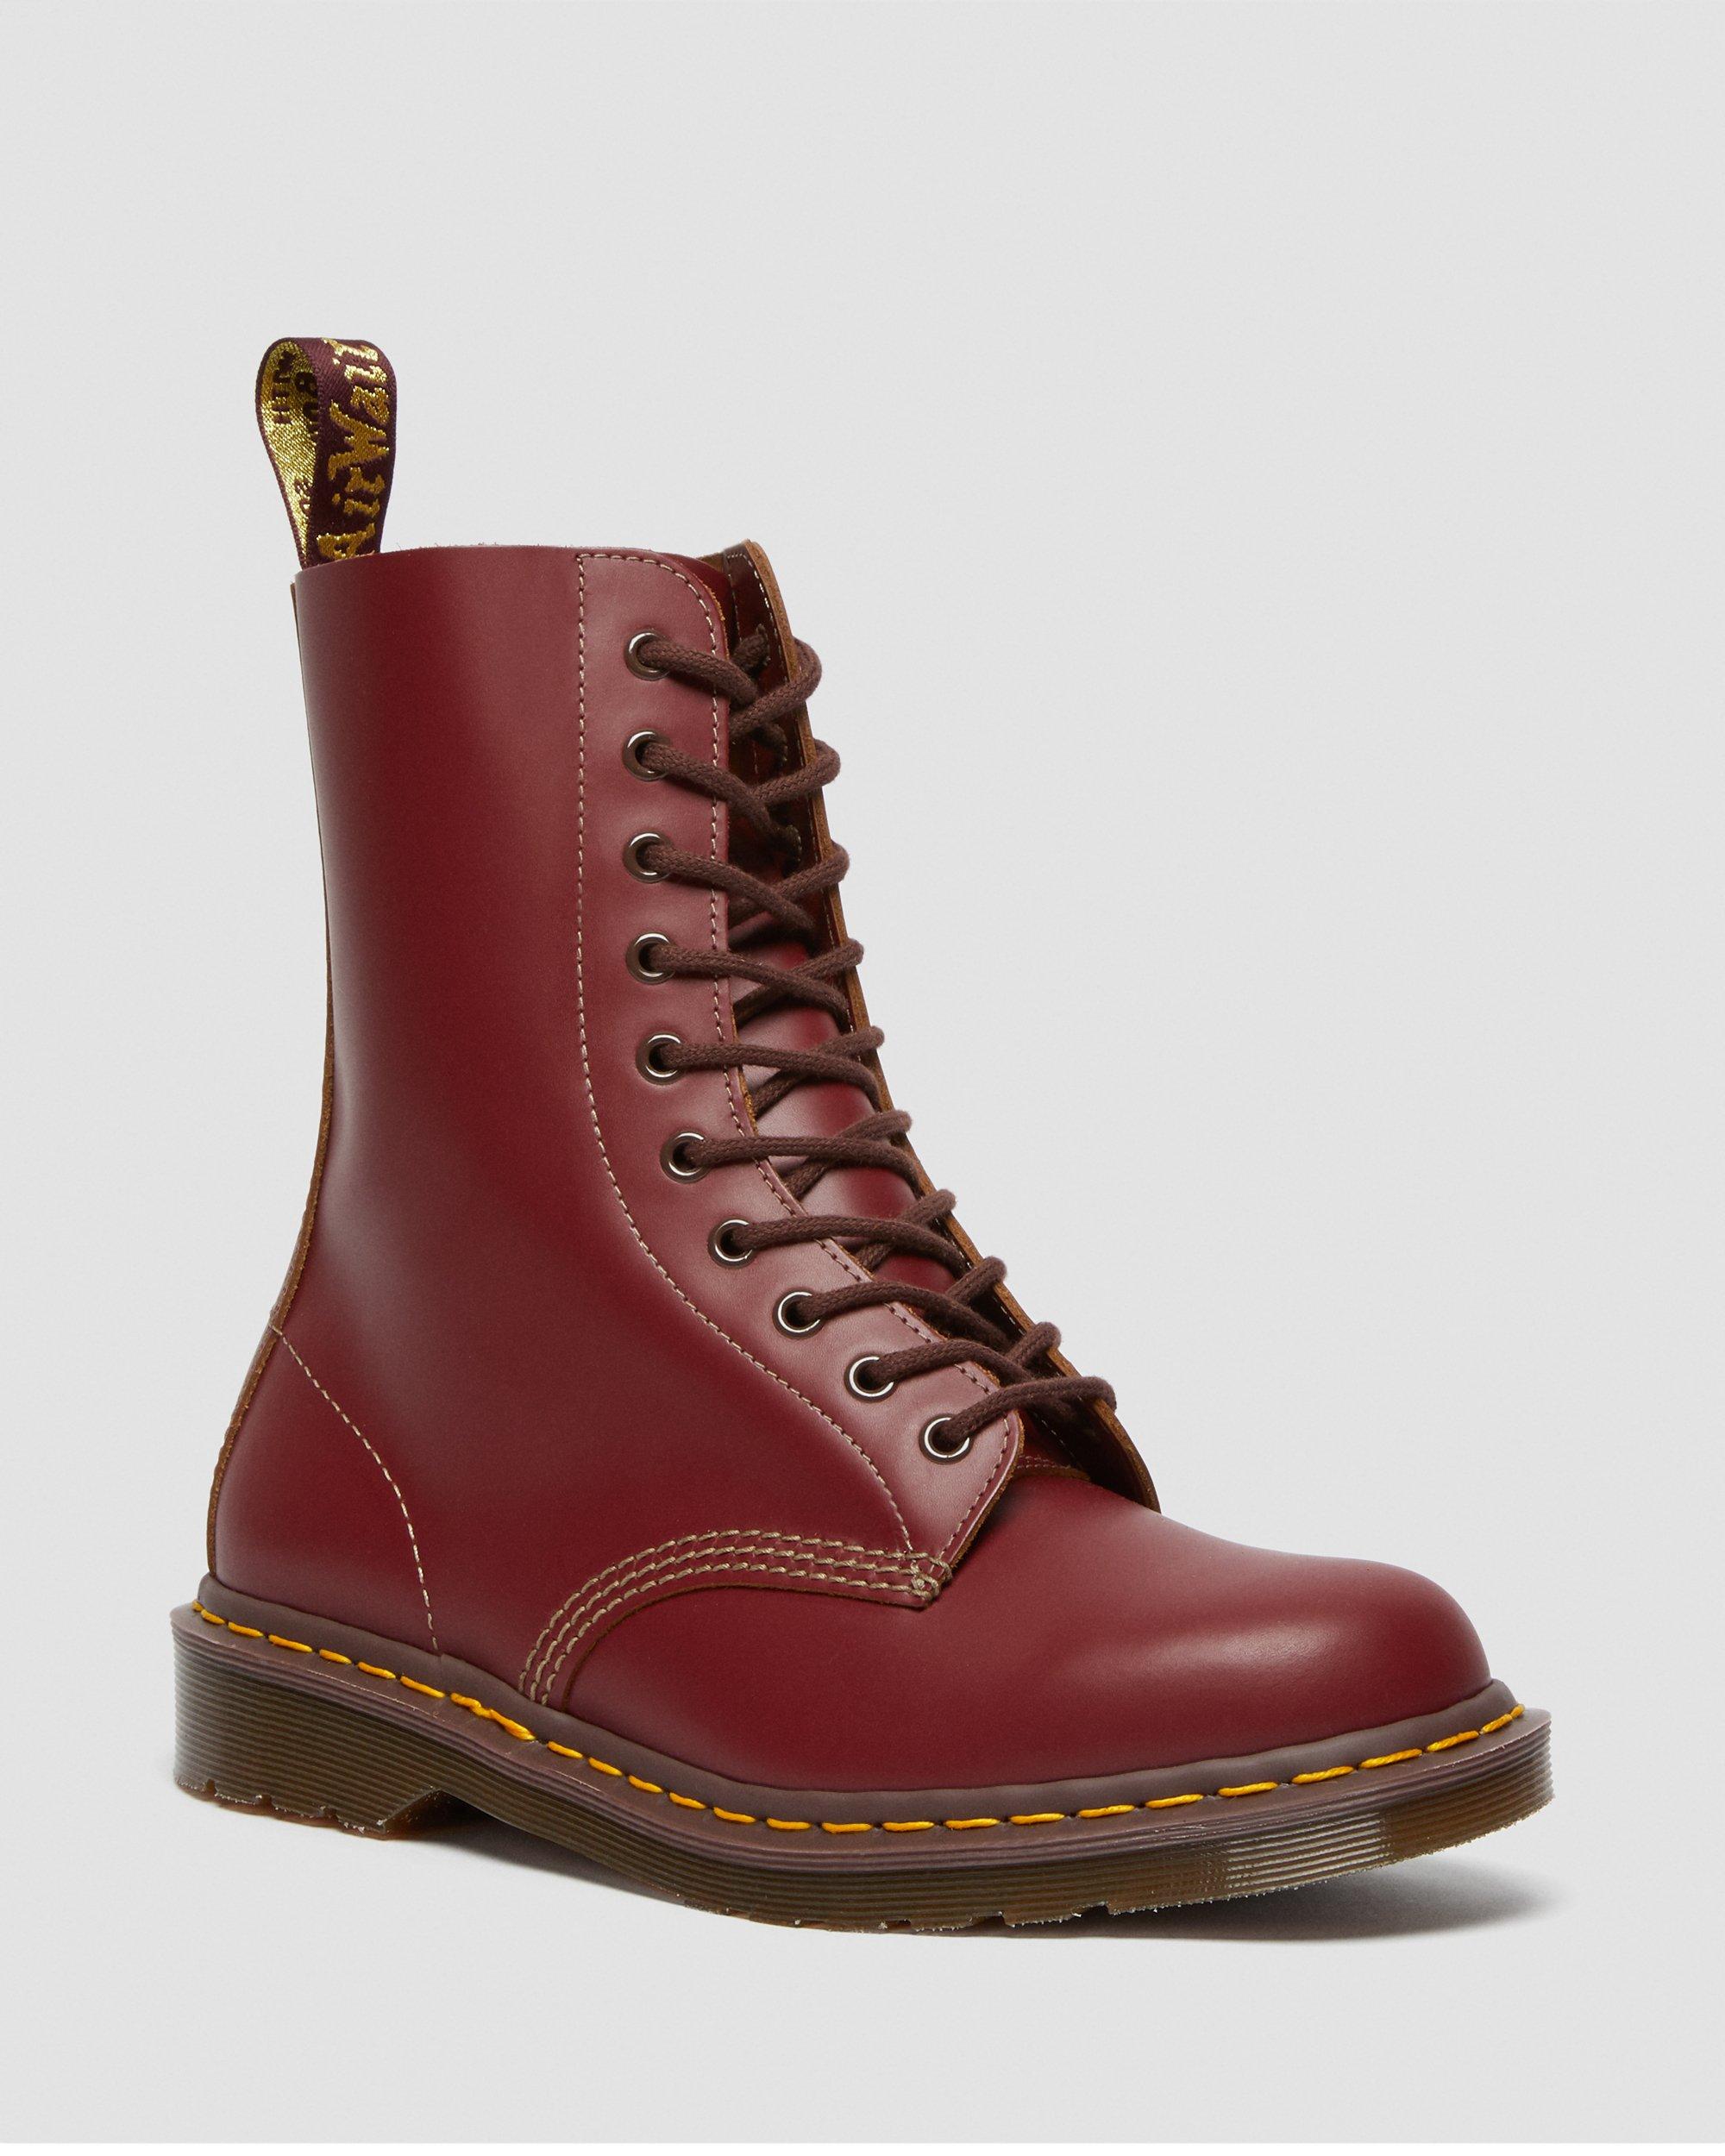 Buy > dr marten oxblood boots > in stock